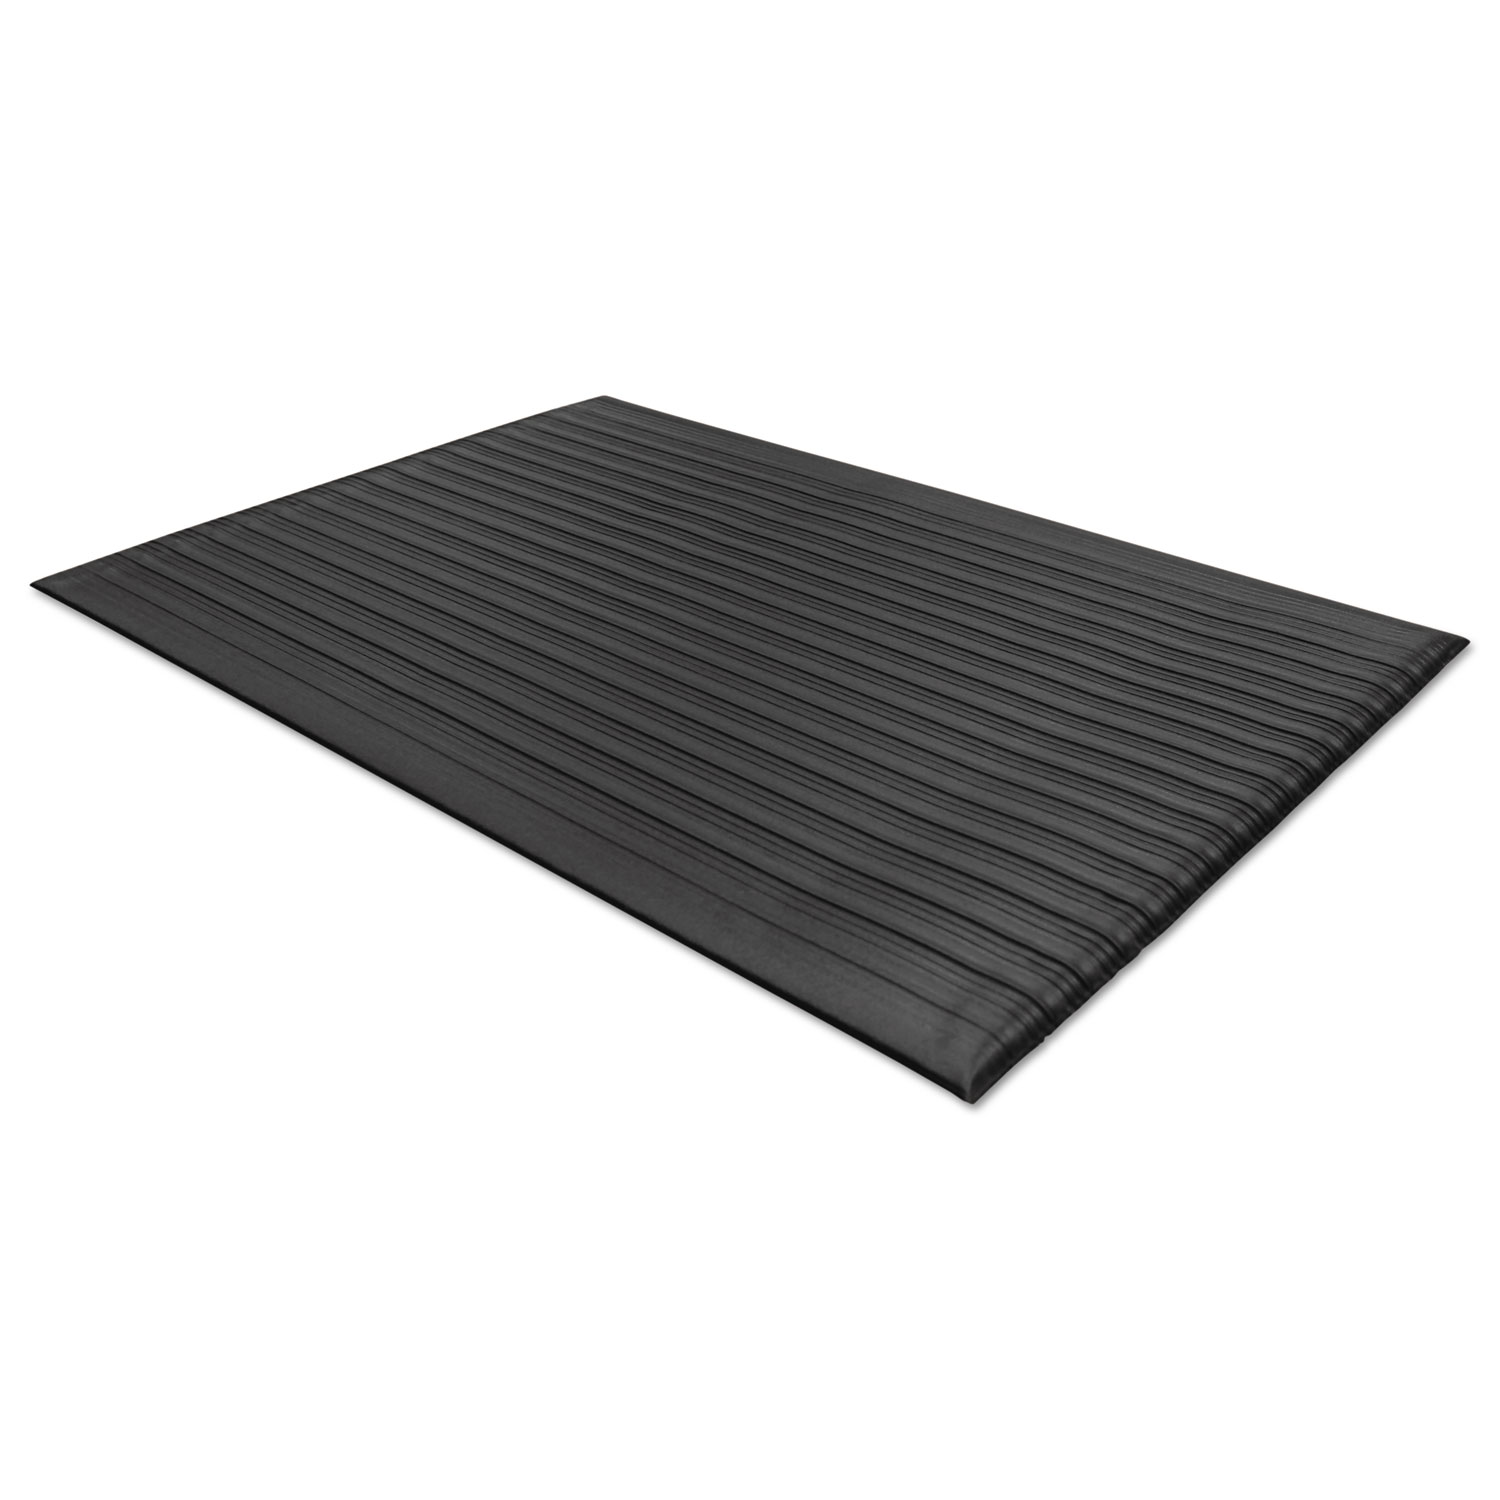 Floor Mats Anti Fatigue Safety Industrial Rubber Vinyl Work Area Black